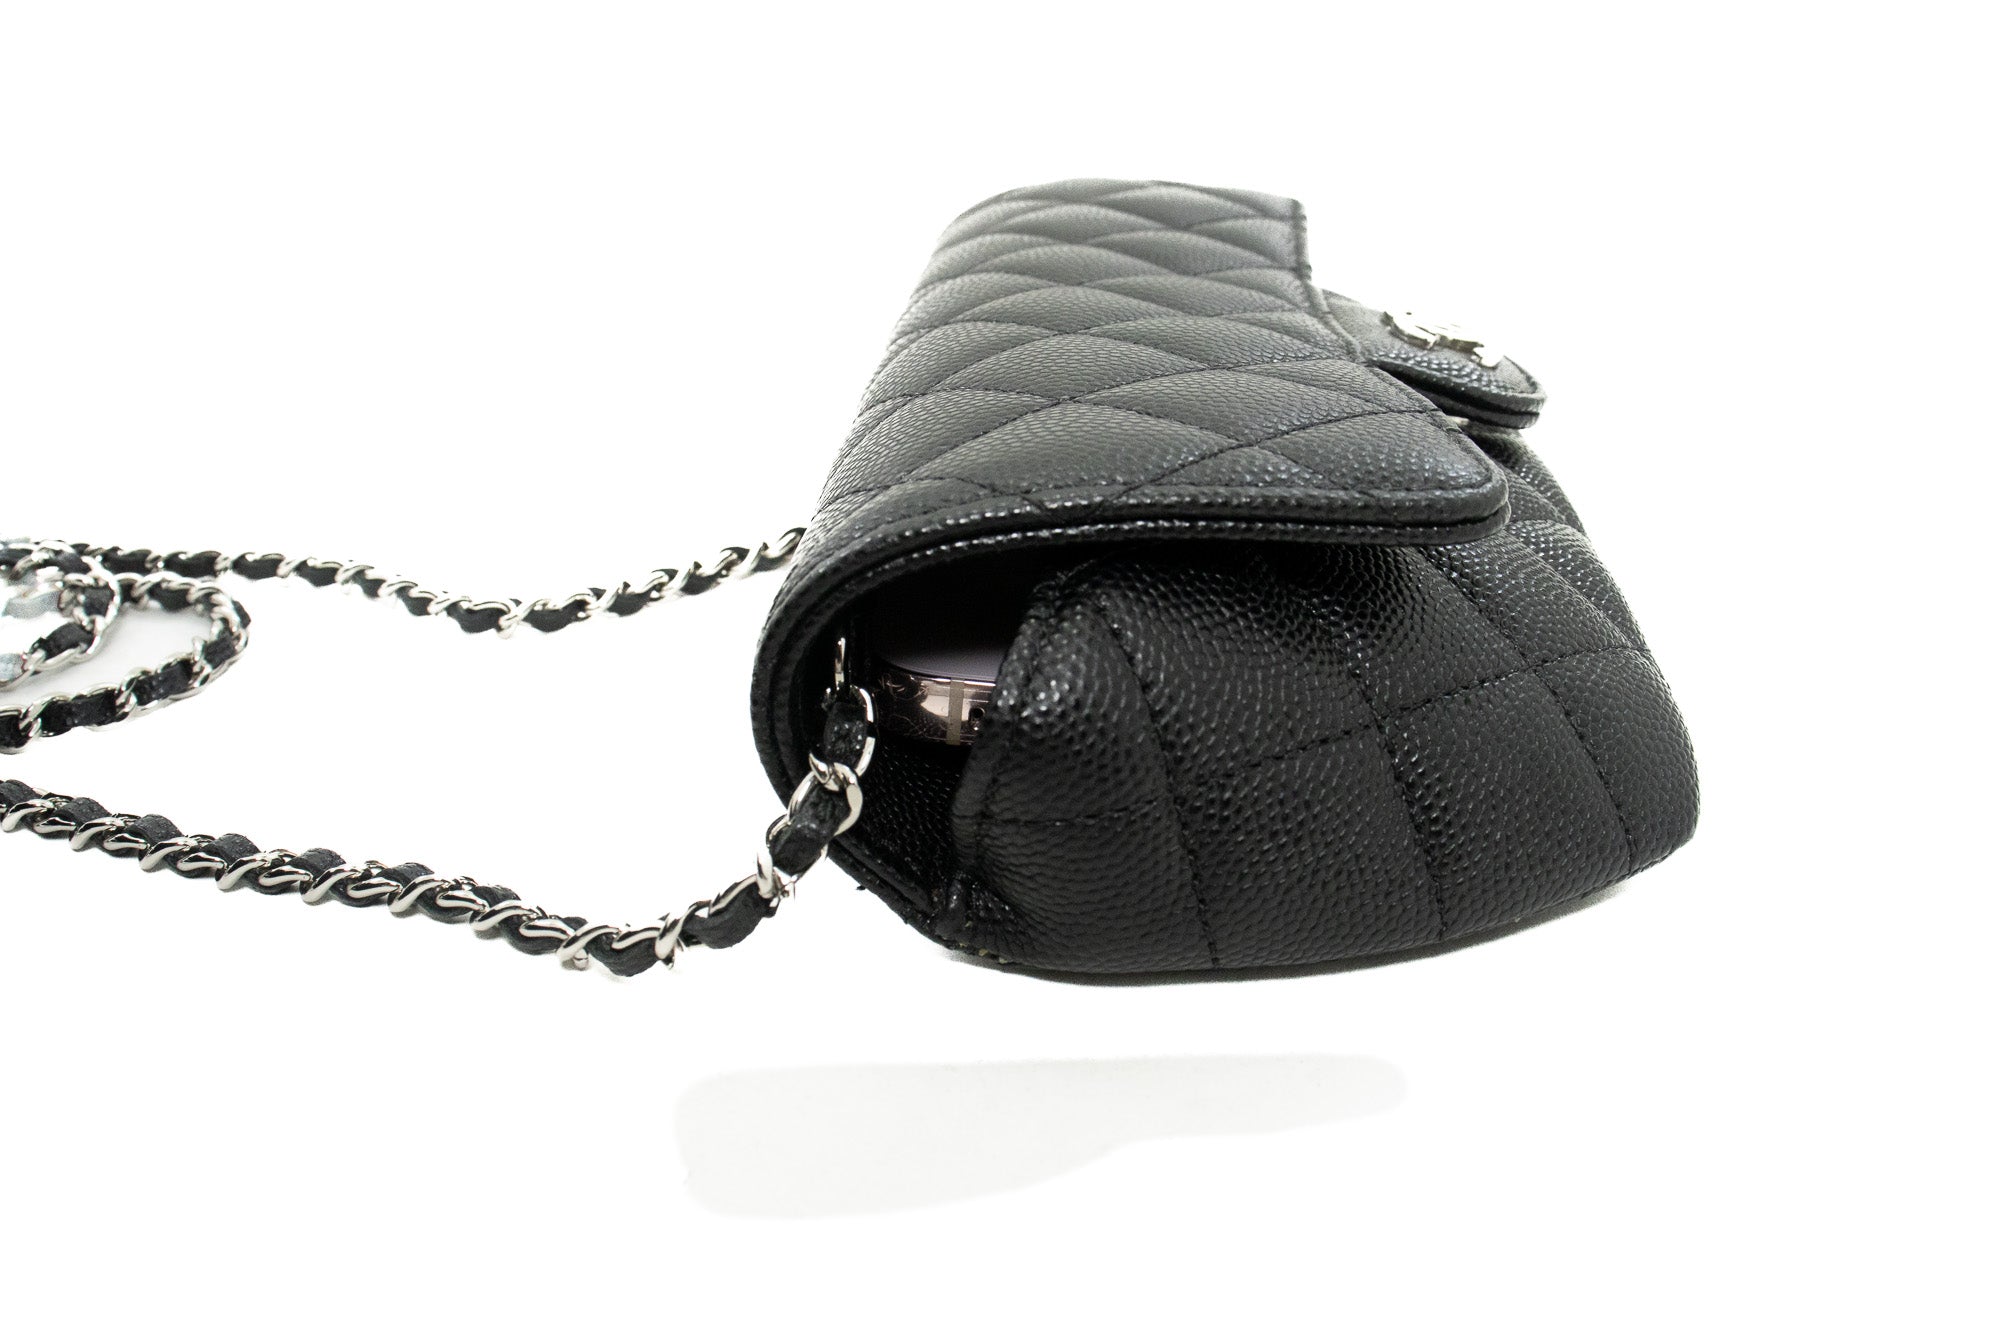 Chanel Flap Phone Holder with Chain Bag Black Crossbody Clutch J99